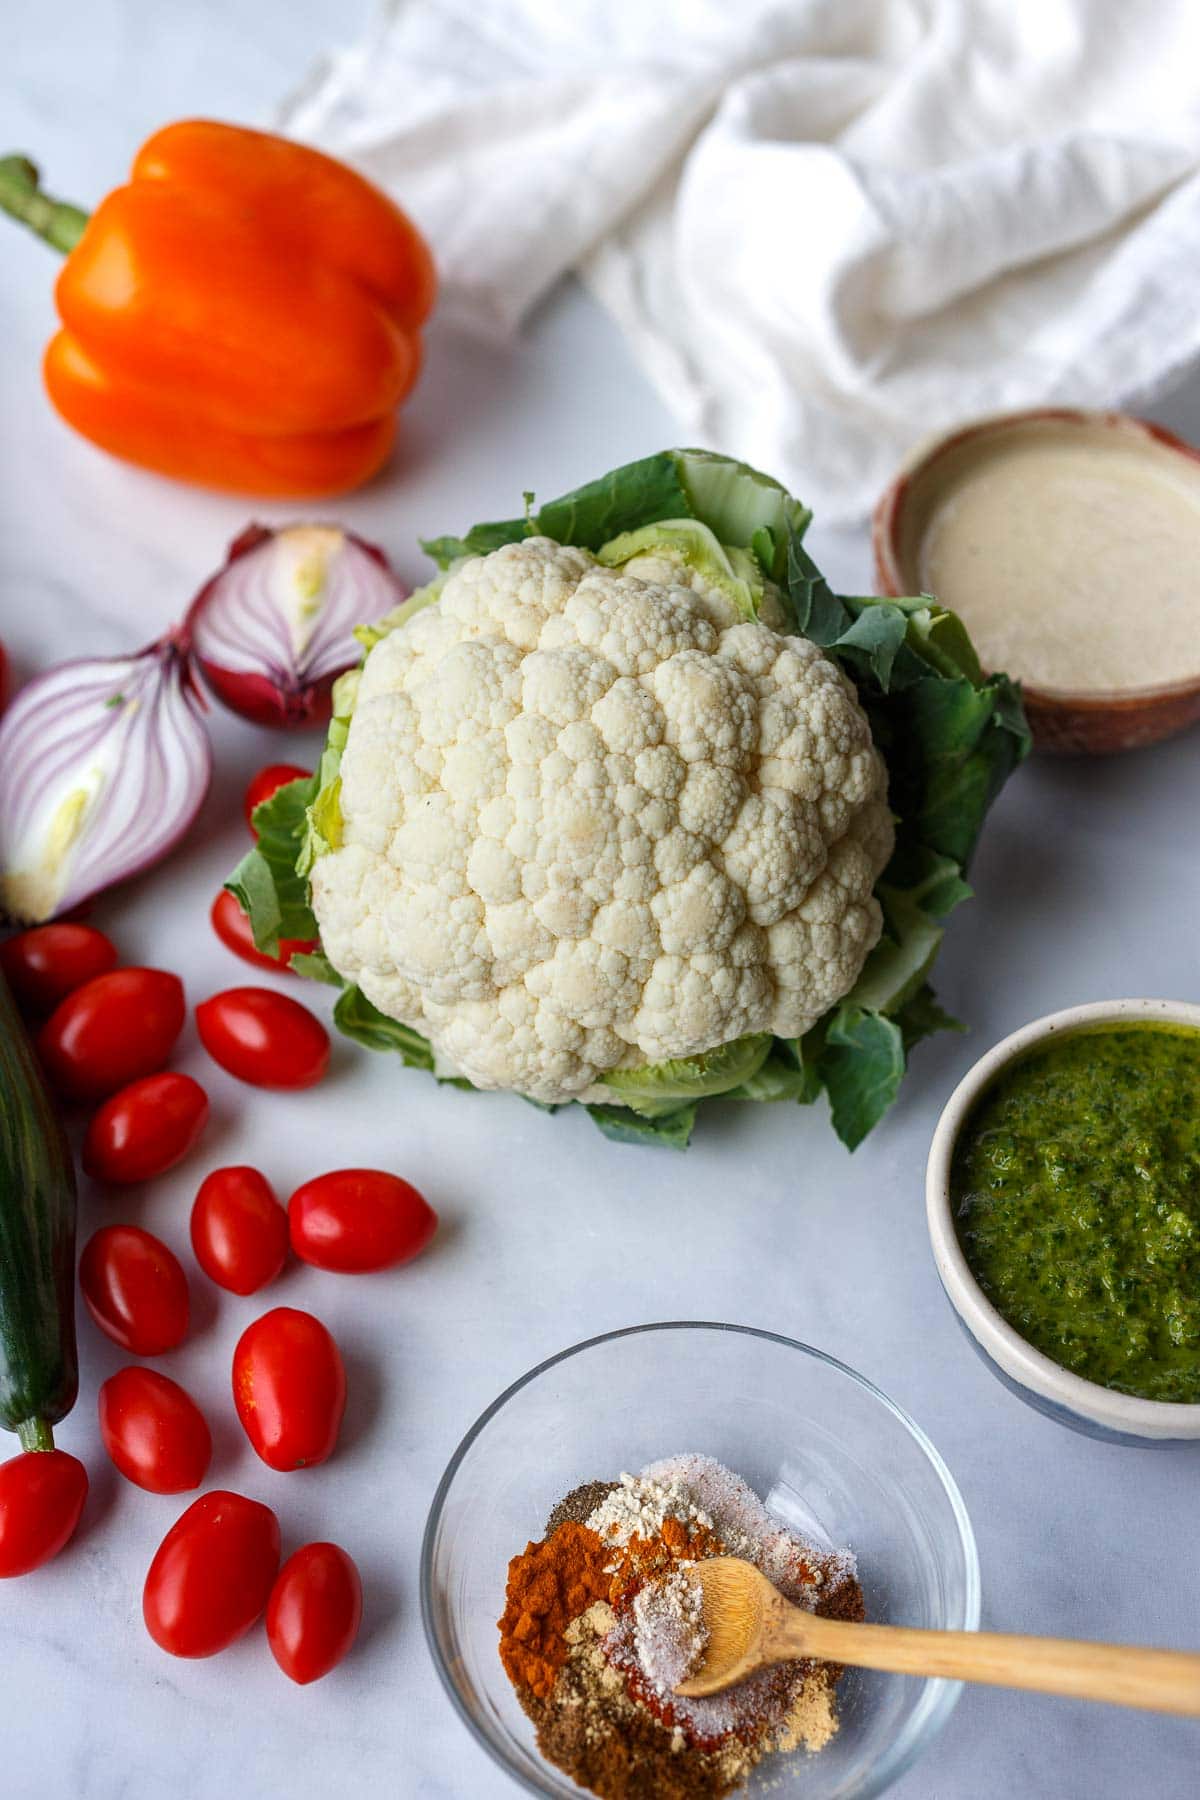 ingredients for cauliflower shawarma- cauliflower head, onion, tomato, cucumber, tahini sauce, zhoug, shawarma spice blend.